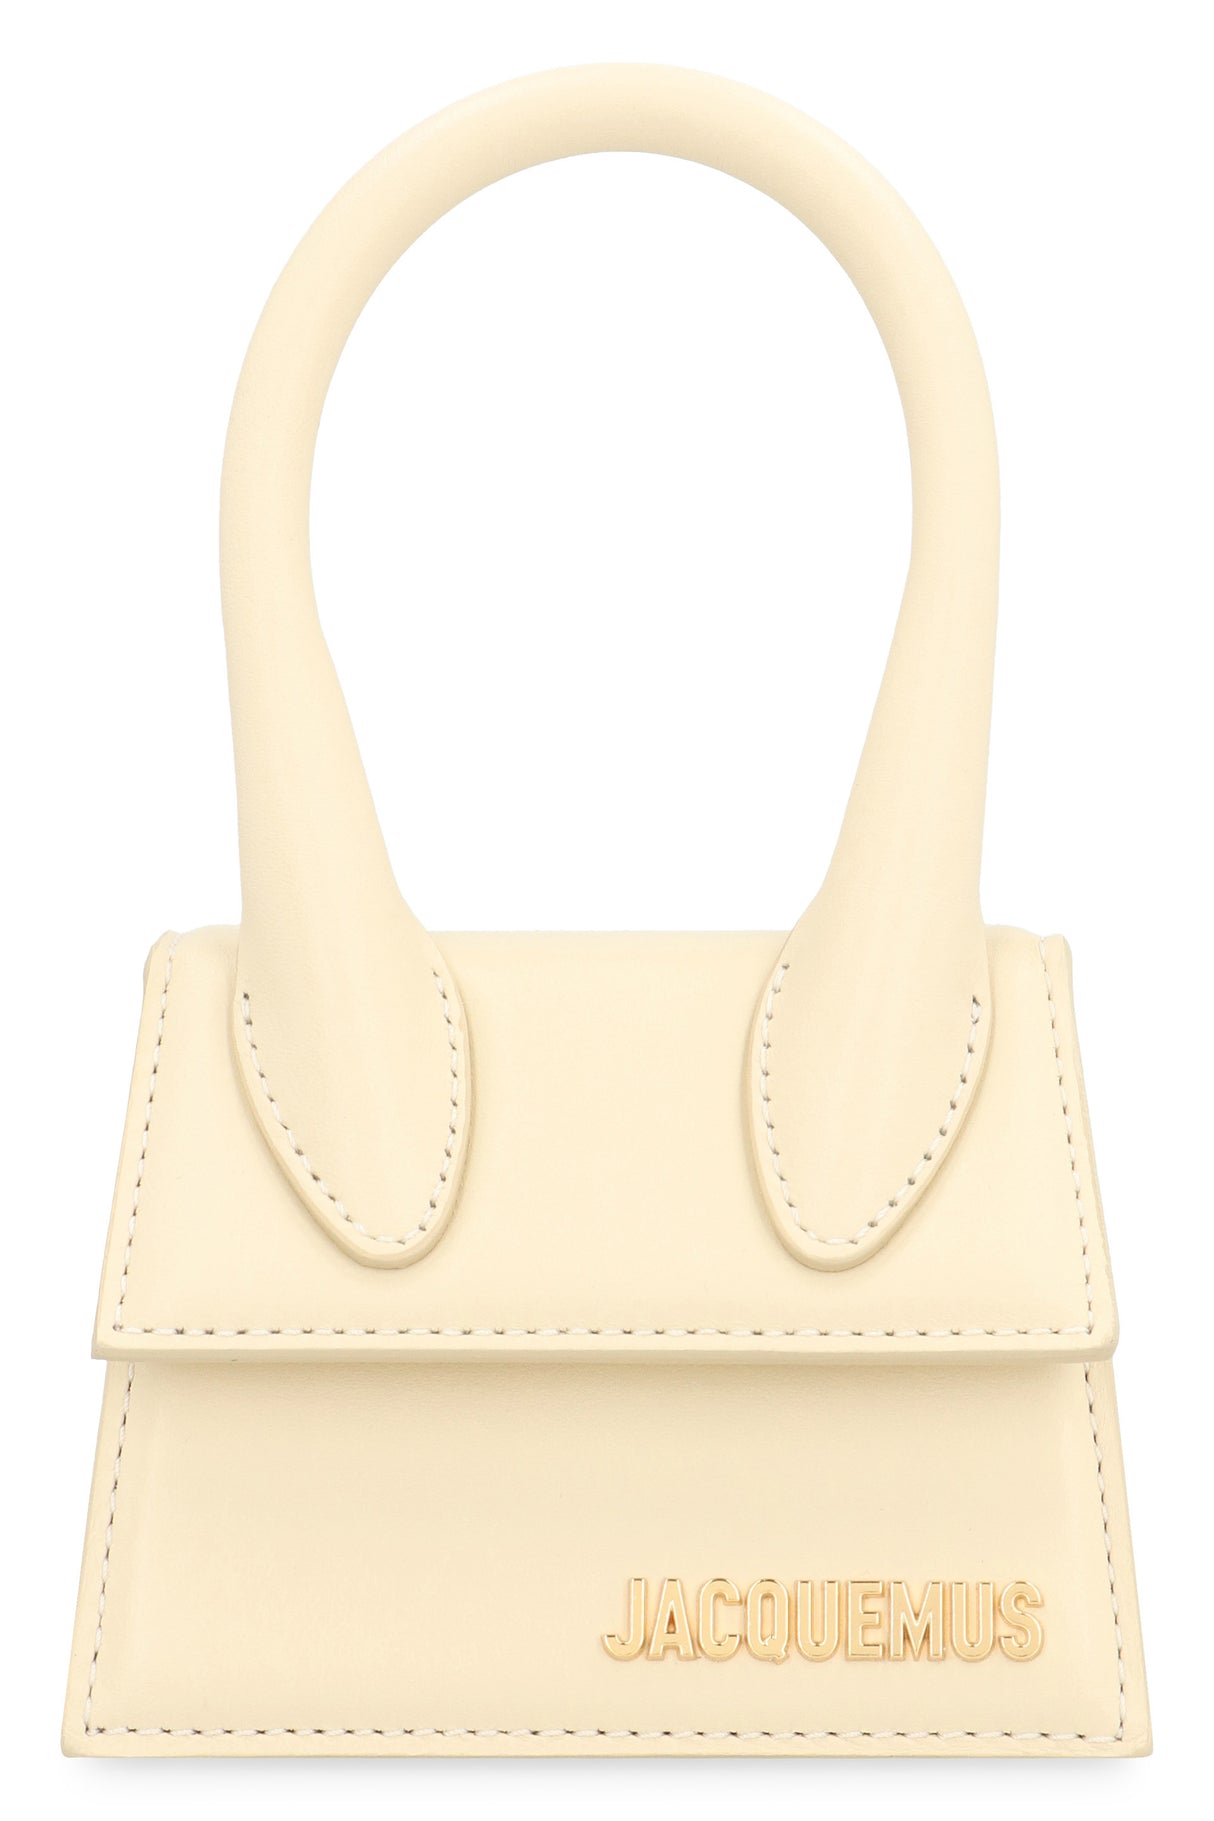 JACQUEMUS Ivory Leather Handbag with Stiff Handle and Gold-Tone Hardware